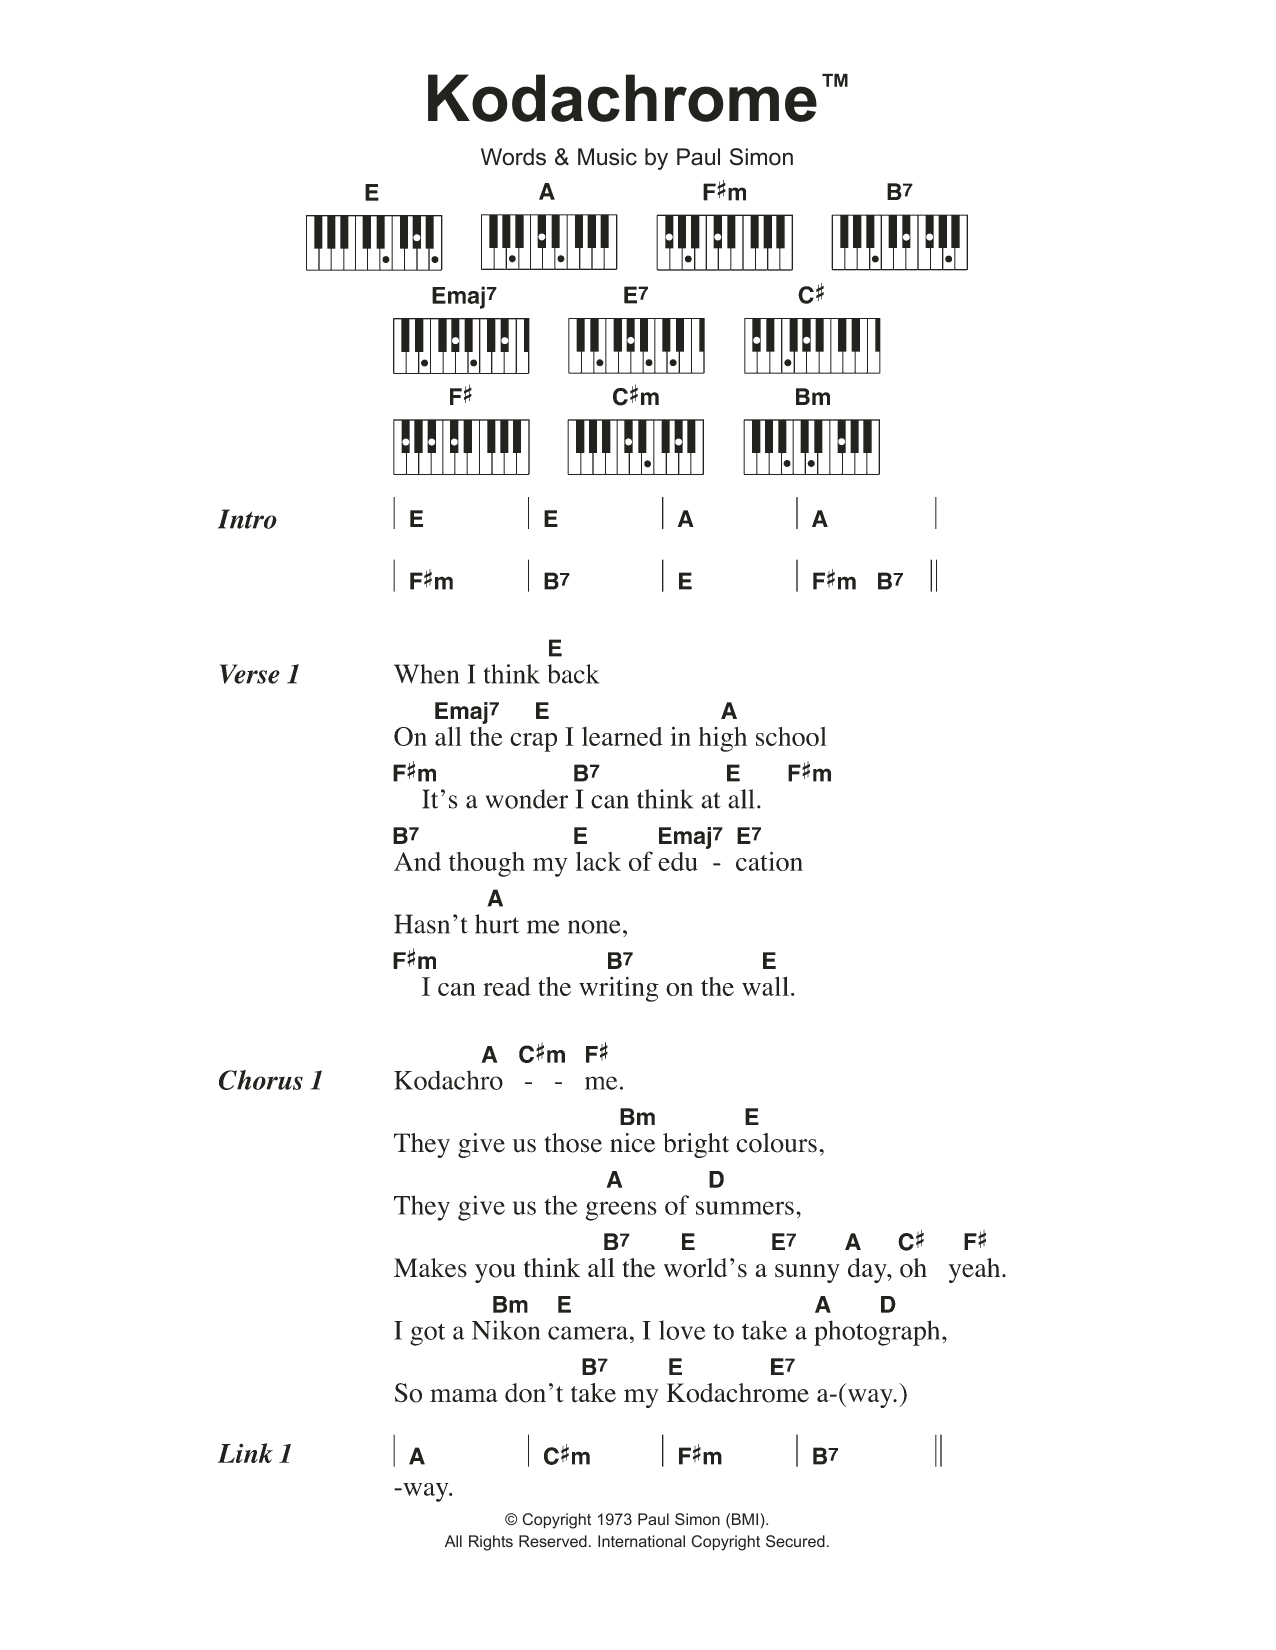 Paul Simon KodachromeTM Sheet Music Notes & Chords for Ukulele with strumming patterns - Download or Print PDF